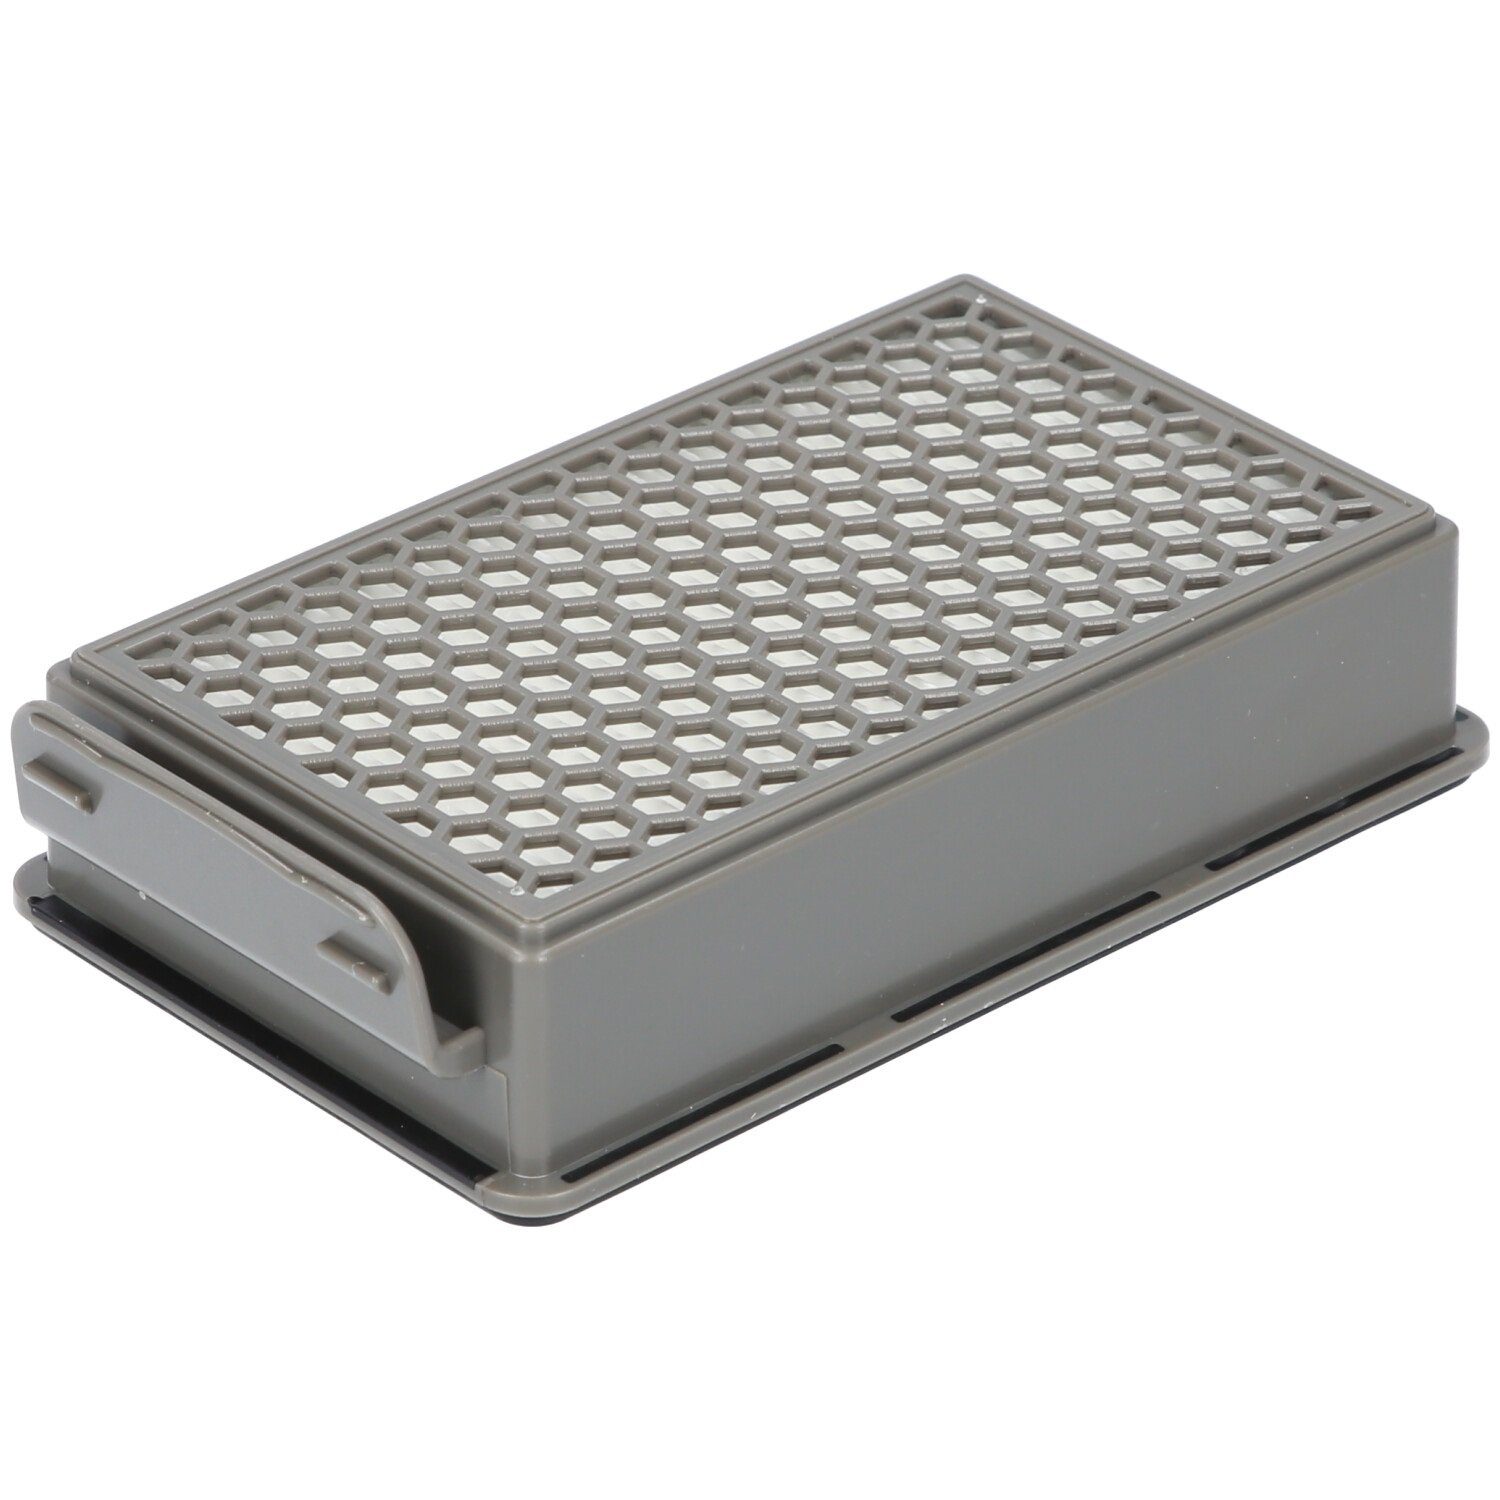 Rundfilter, MO3969PA, / / Filterkassette, MO3967PA für MO3951PA geeignet Filter-Set ZR005901 für McFilter 2x / Moulinex MO3953PA Alternativ MO3985PA, 2x